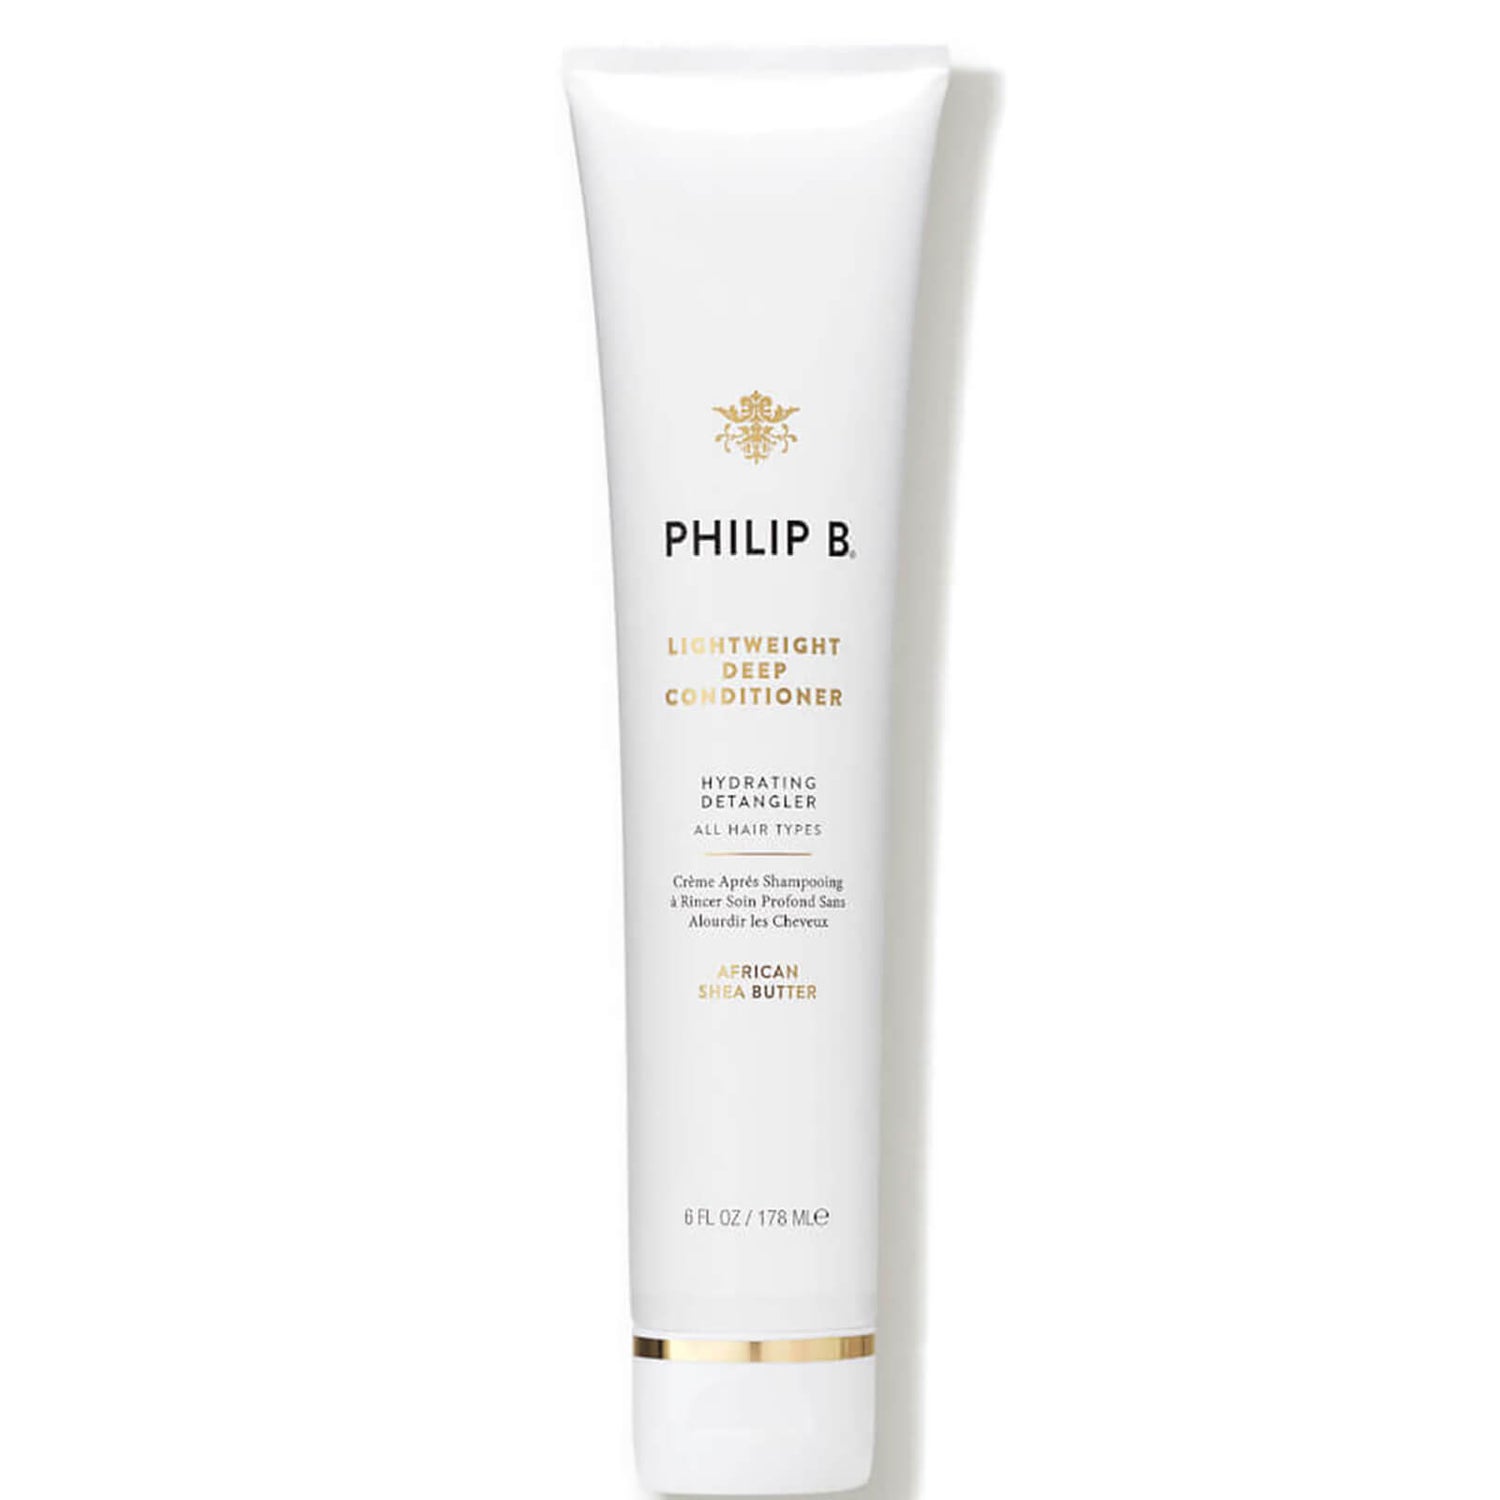 Philip B Light-Weight Deep Conditioning Crème Rinse (178ml)